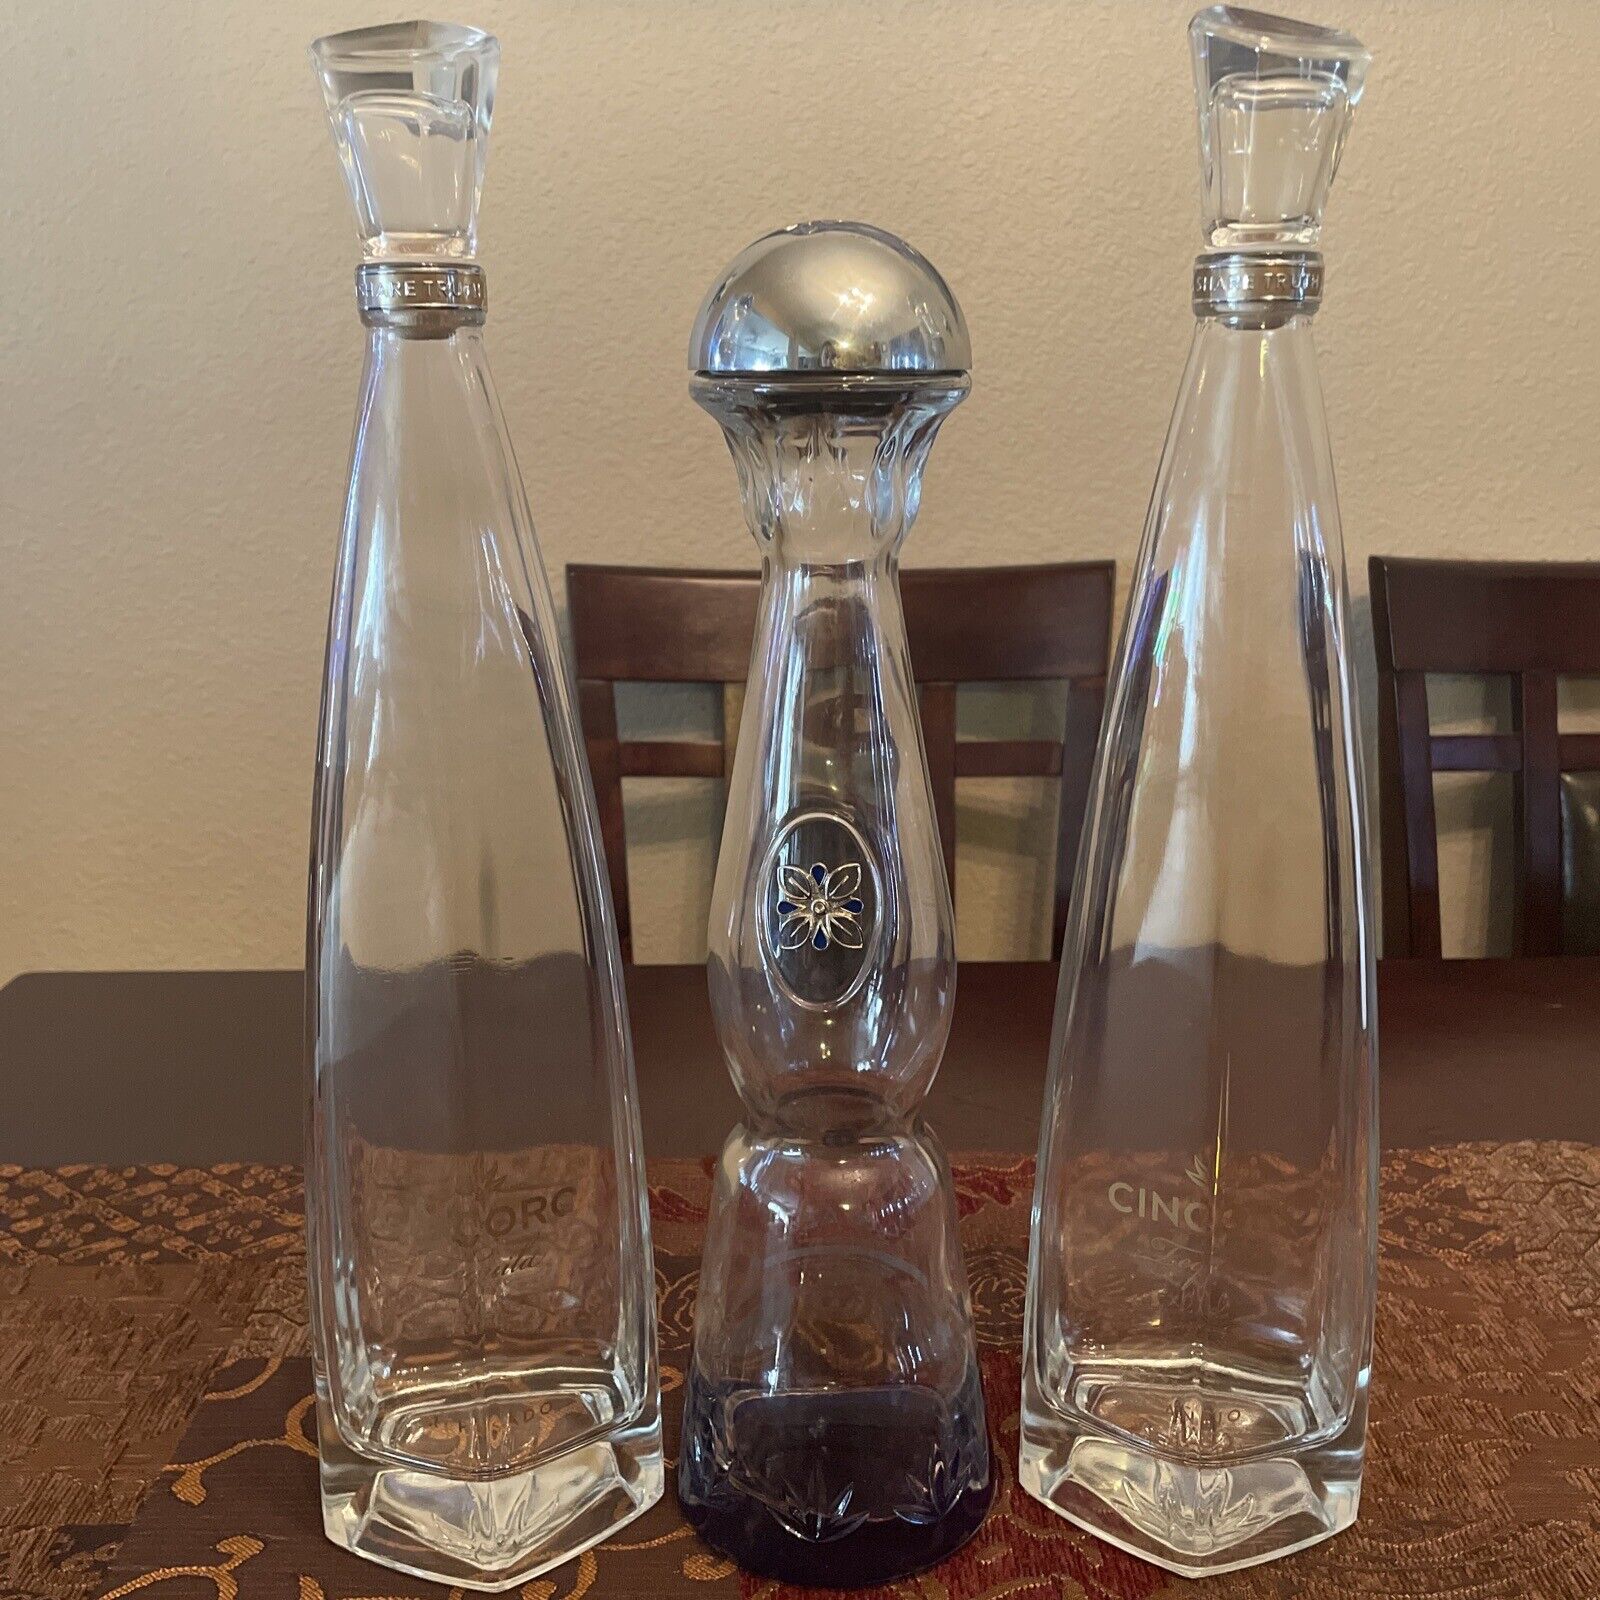 3 Top Shelf Celebrity Tequila Bottles Clase Azul Plata, Cincoro Reposado & Anejo